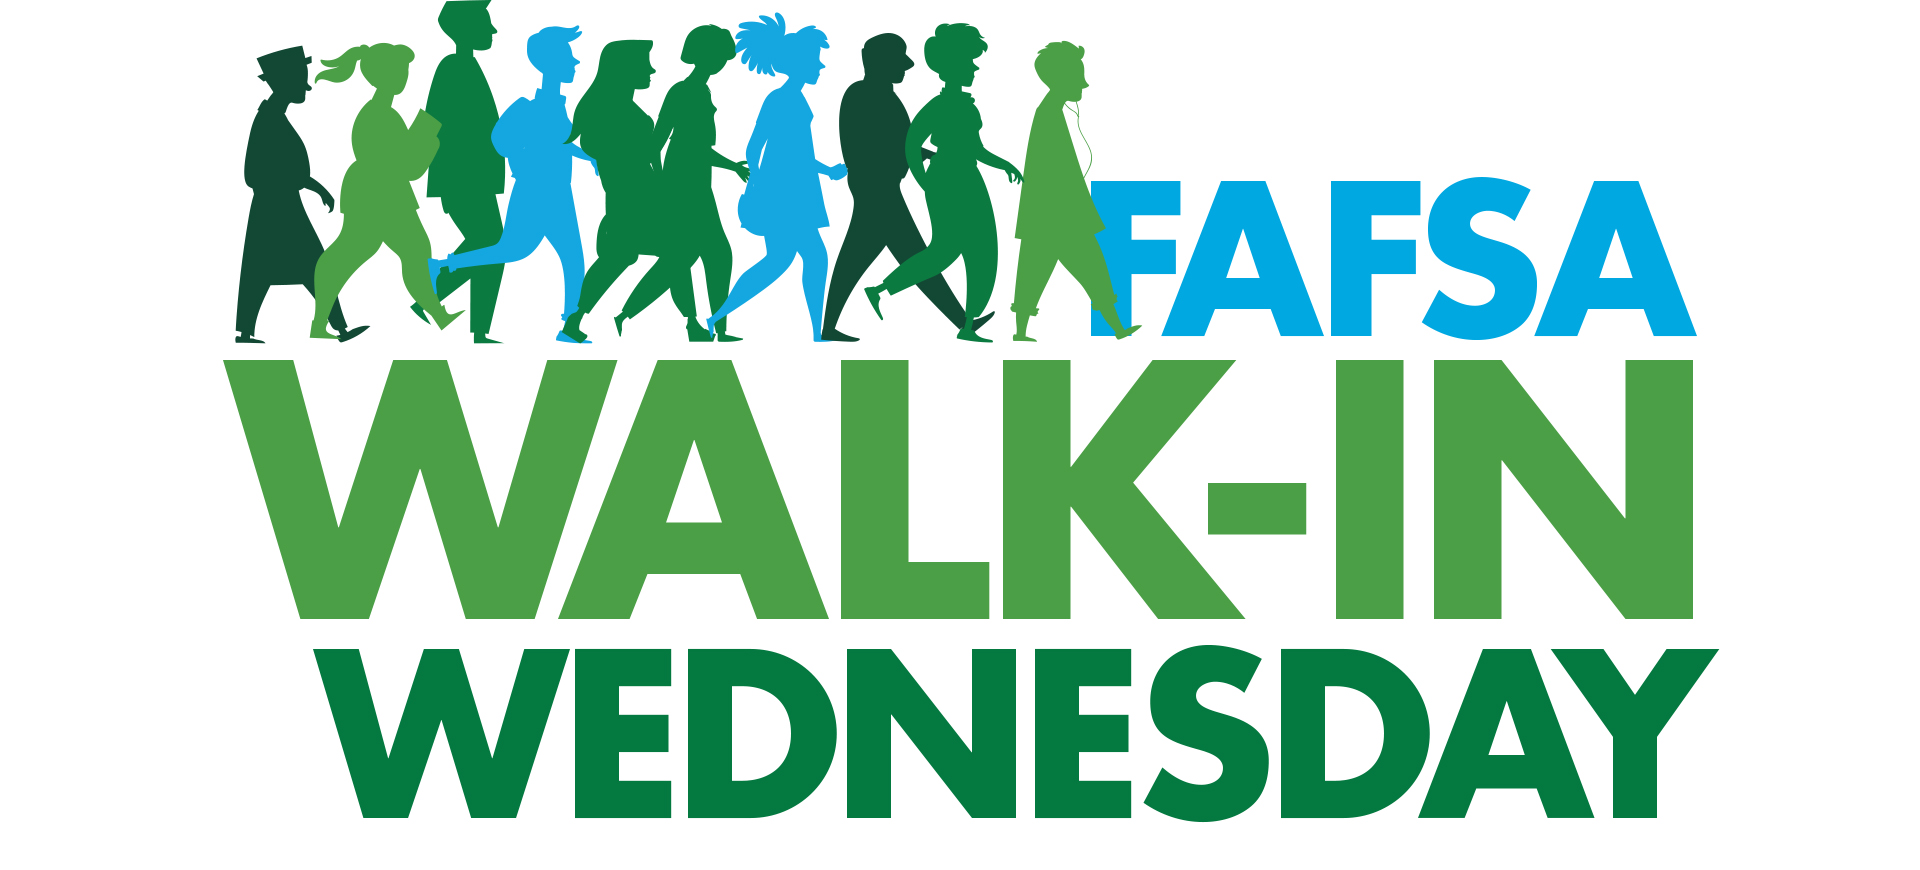 FAFSA walk-in Wednesday